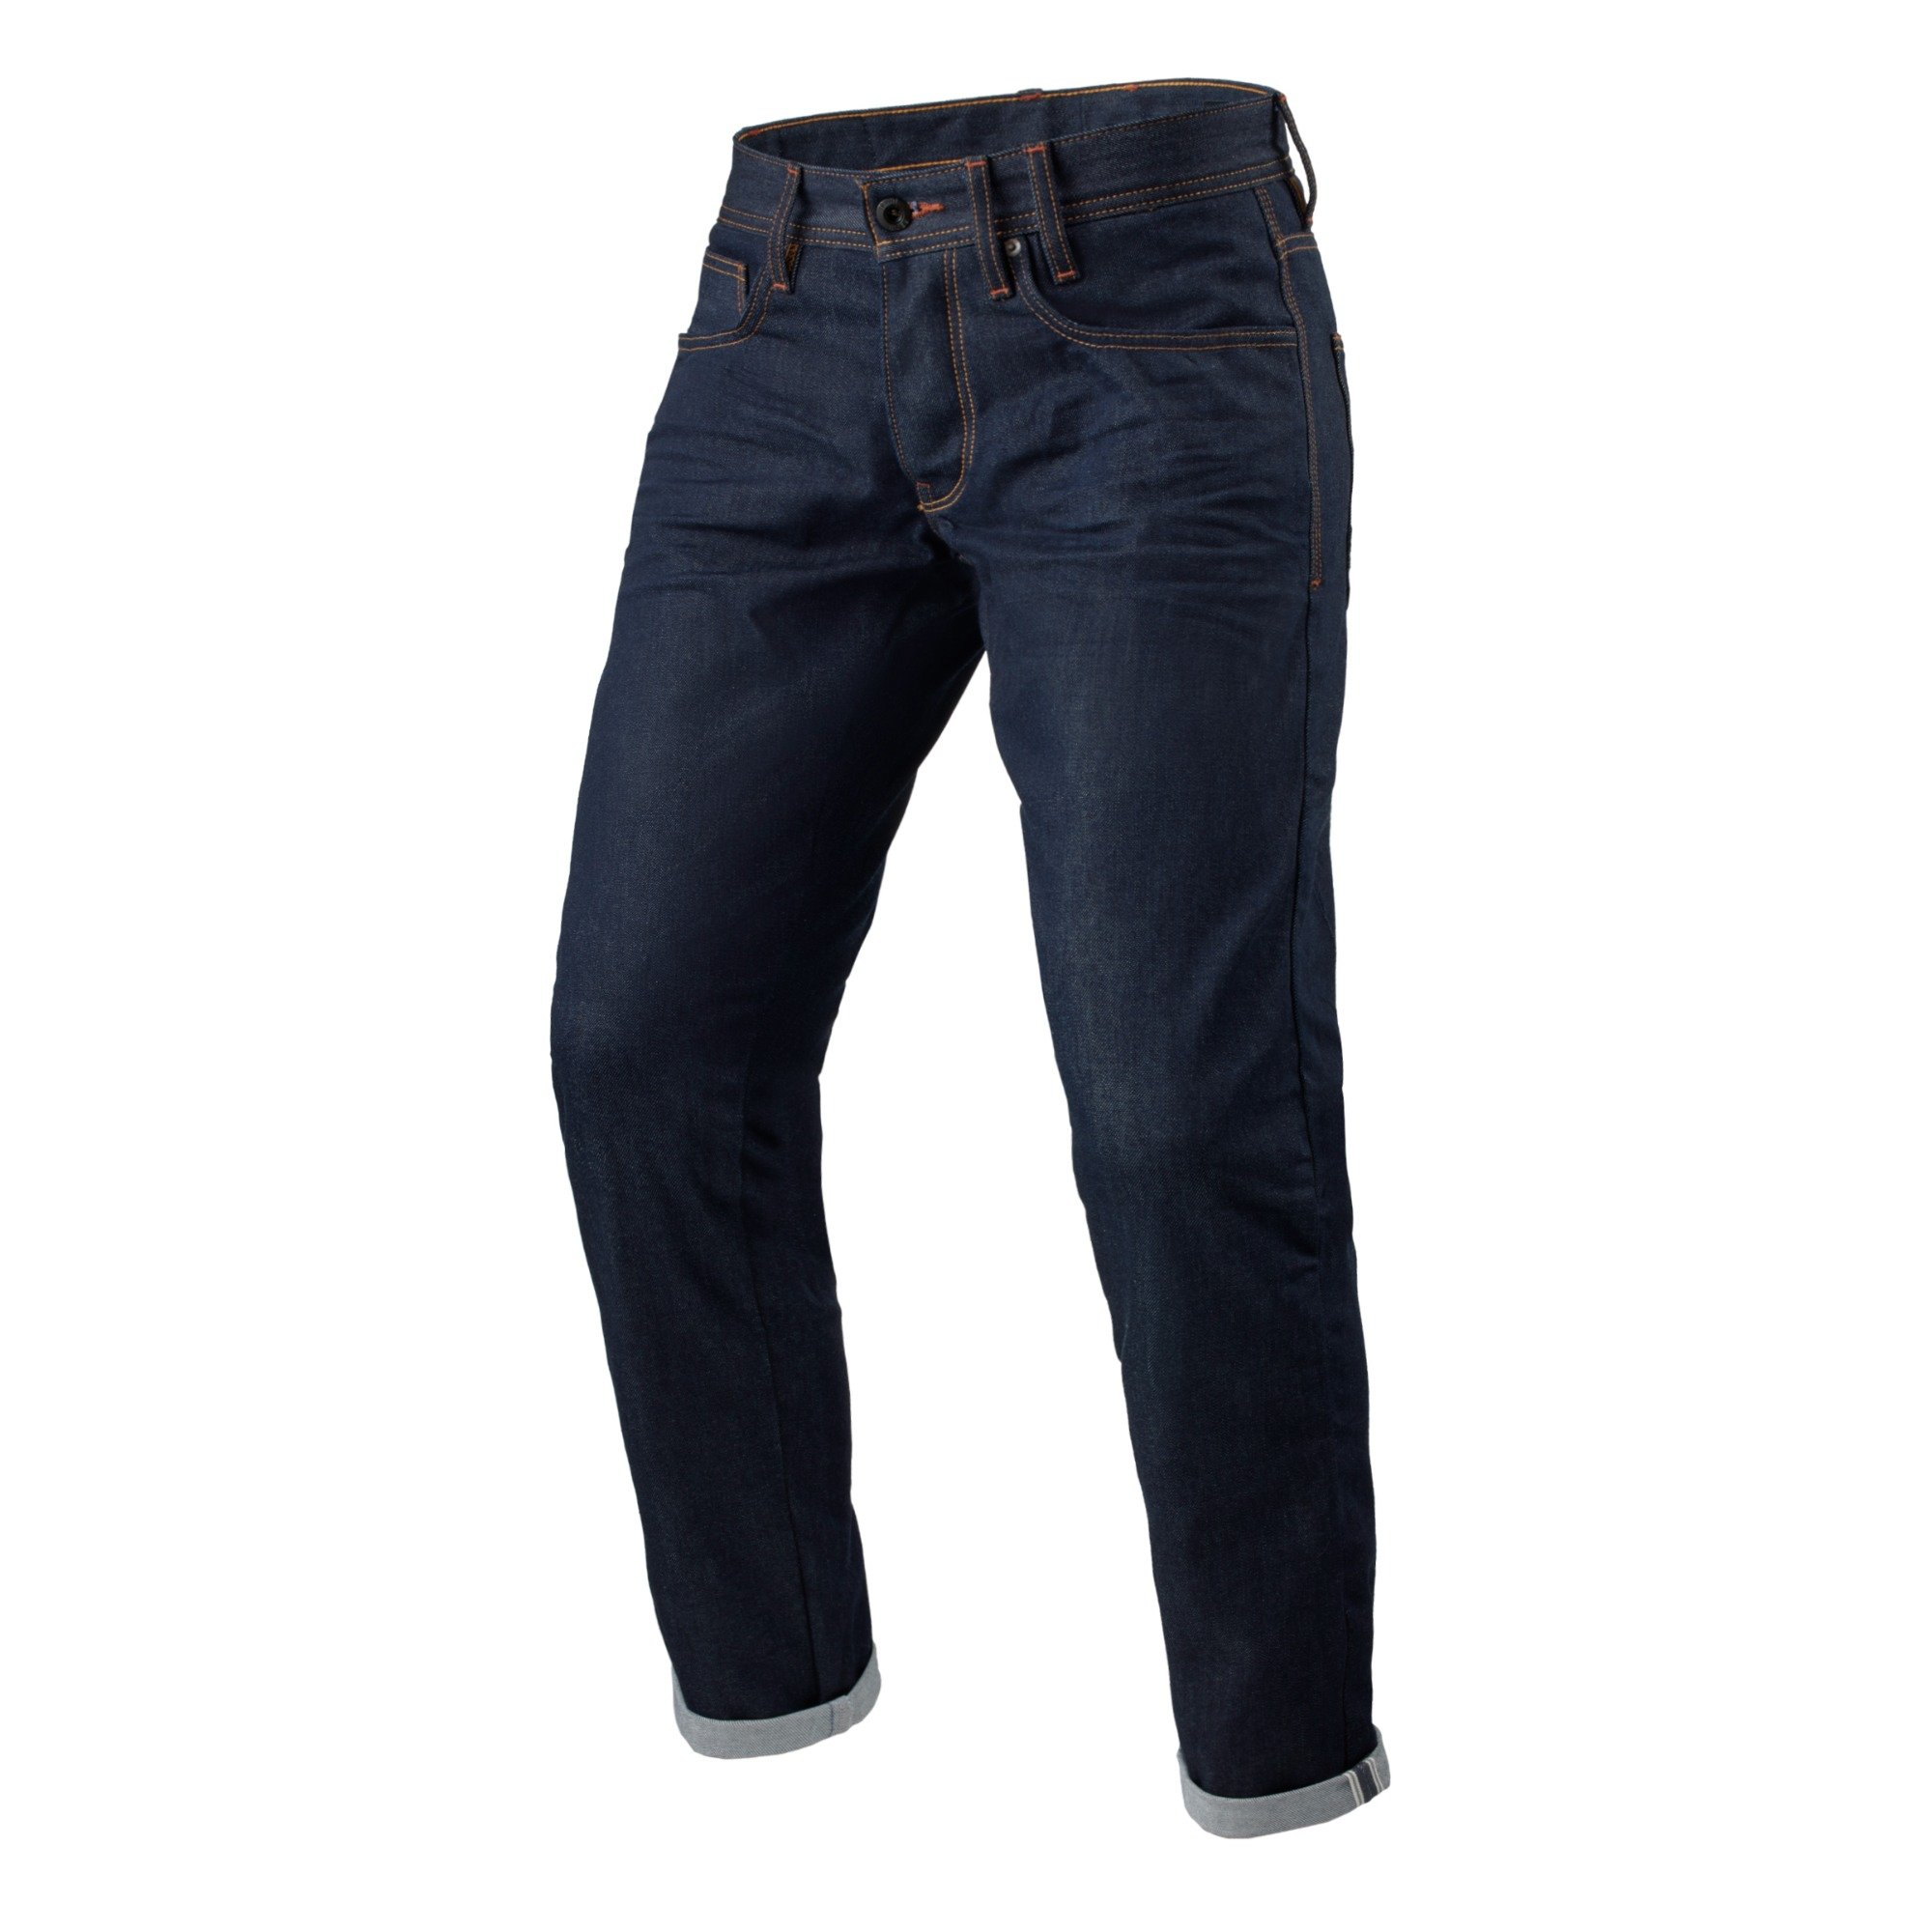 Image of REV'IT! Jeans Lewis Selvedge TF Dark Blue L34 Motorcycle Pants Size L34/W31 EN